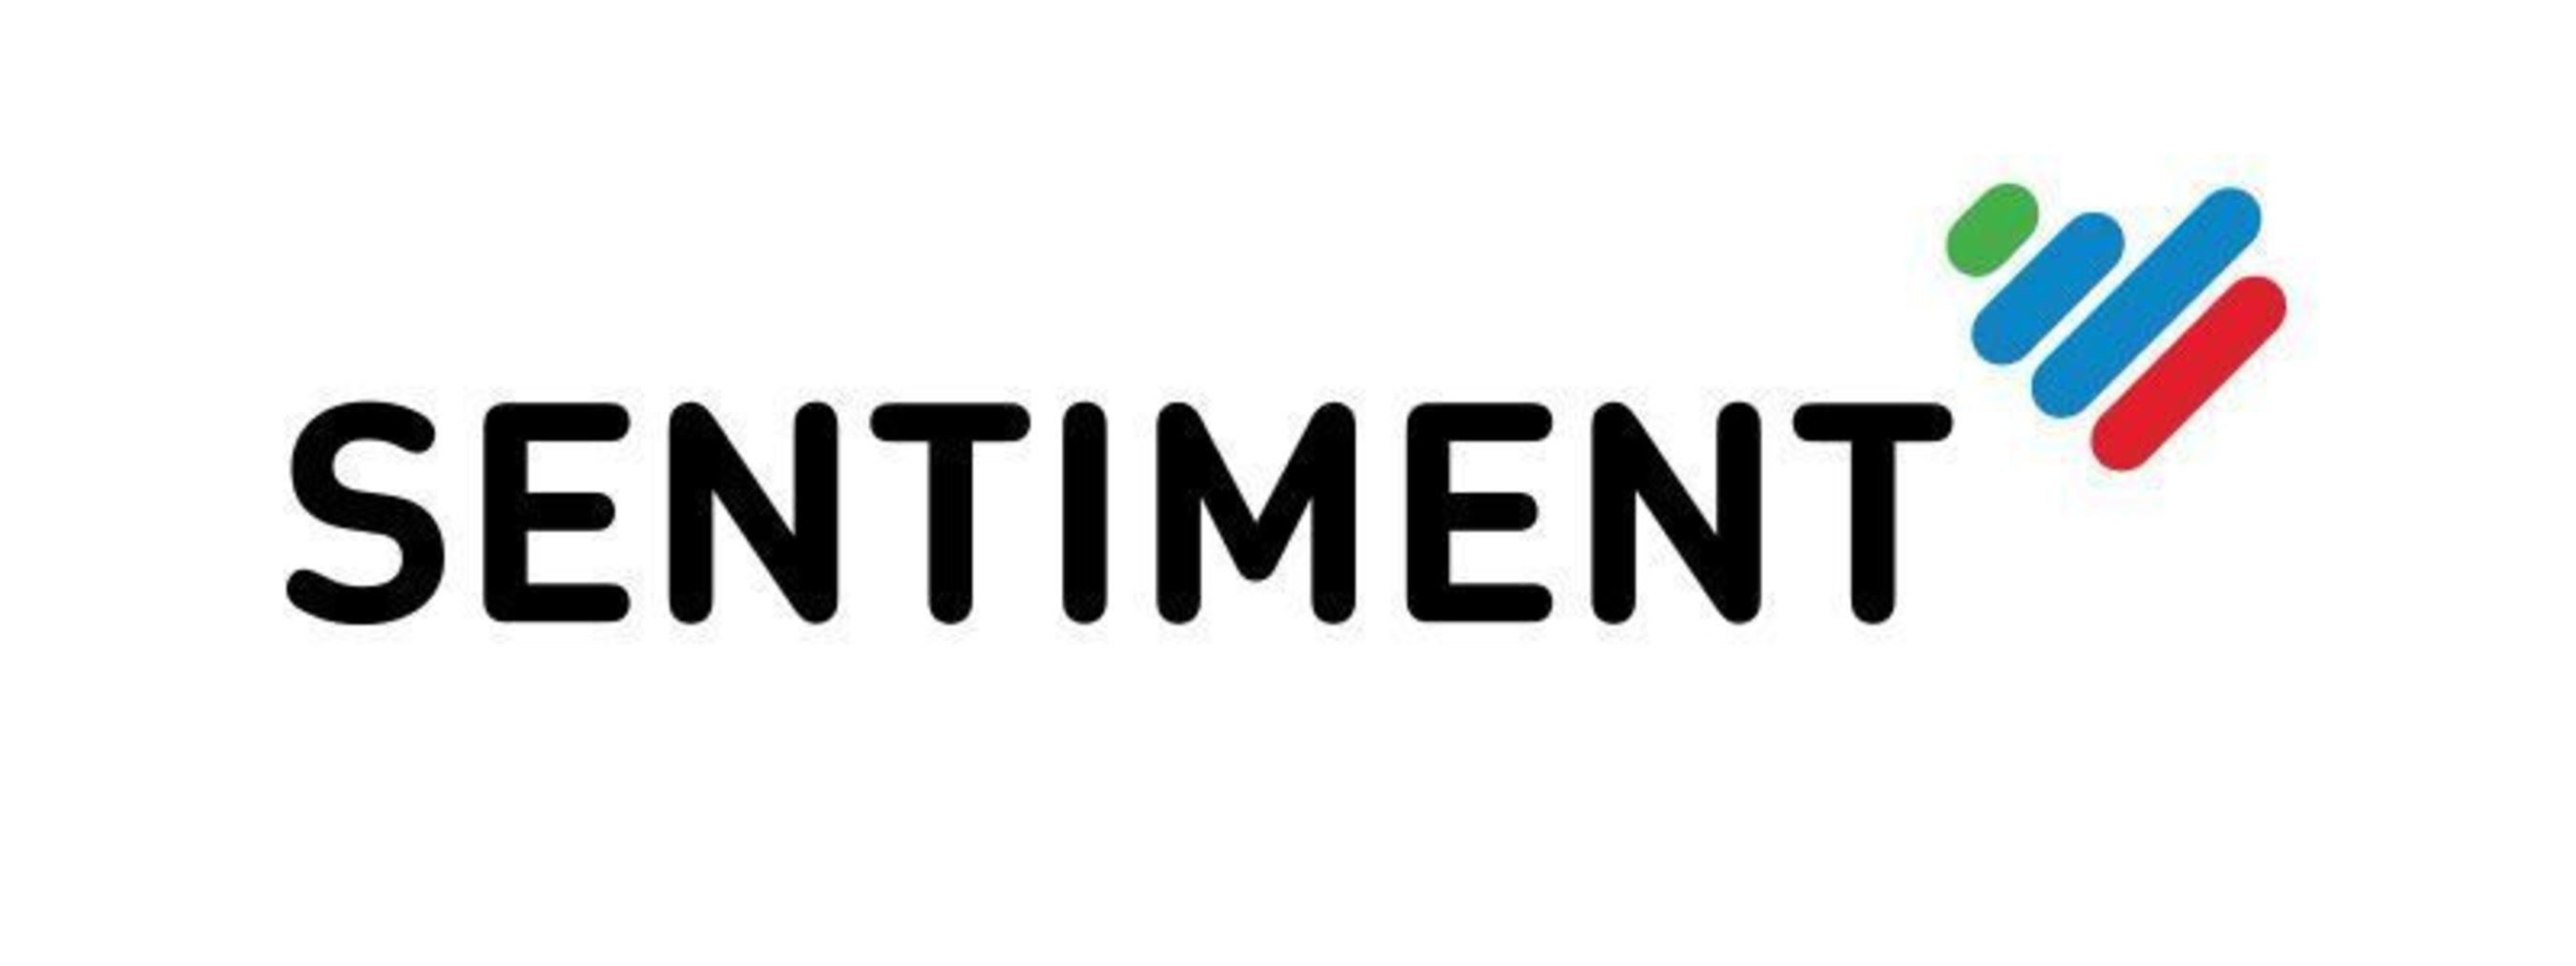 Sentiment logo (PRNewsFoto/Sentiment)